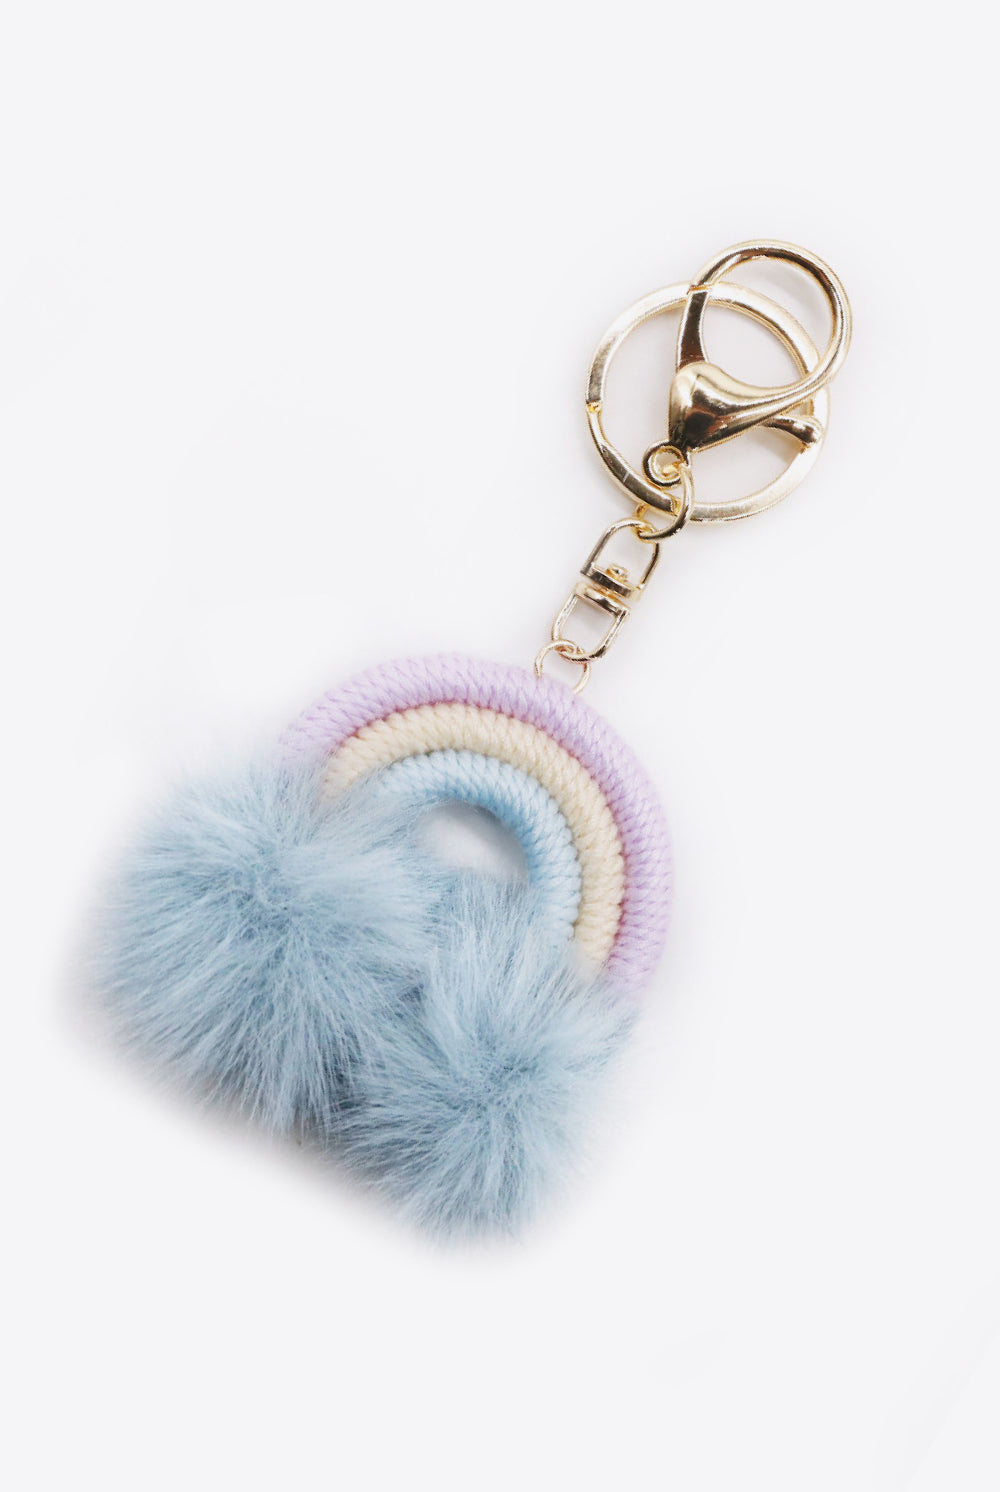 Lavender Assorted 4-Pack Rainbow Pom Pom Keychain Key Chains